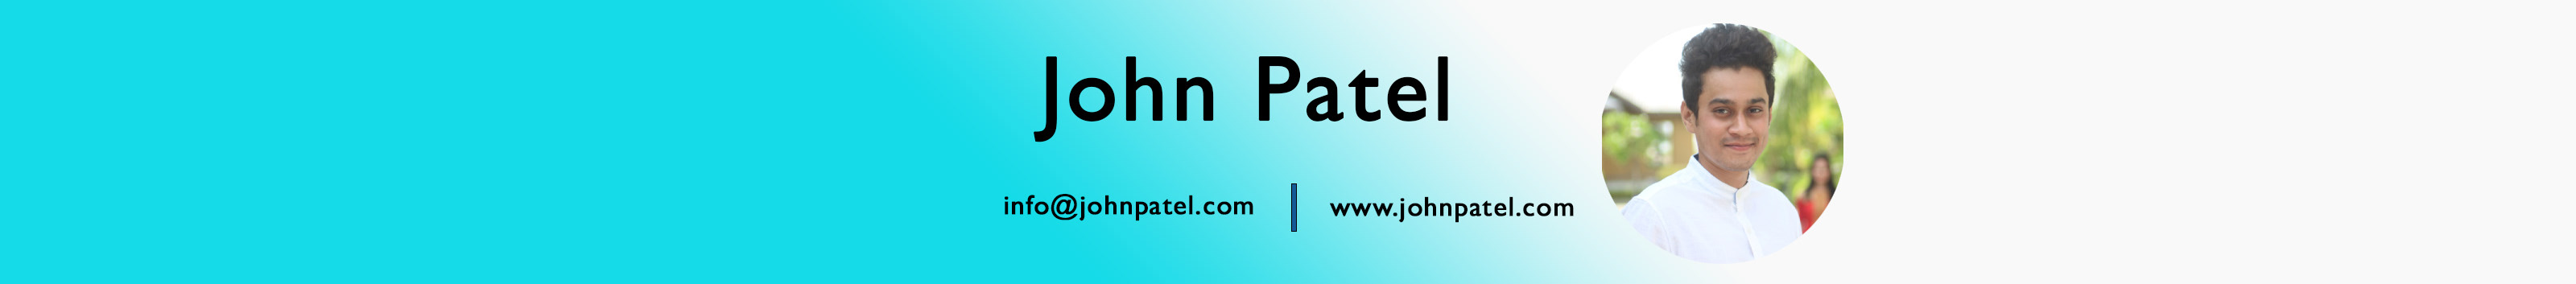 Profil-Banner von John Patel